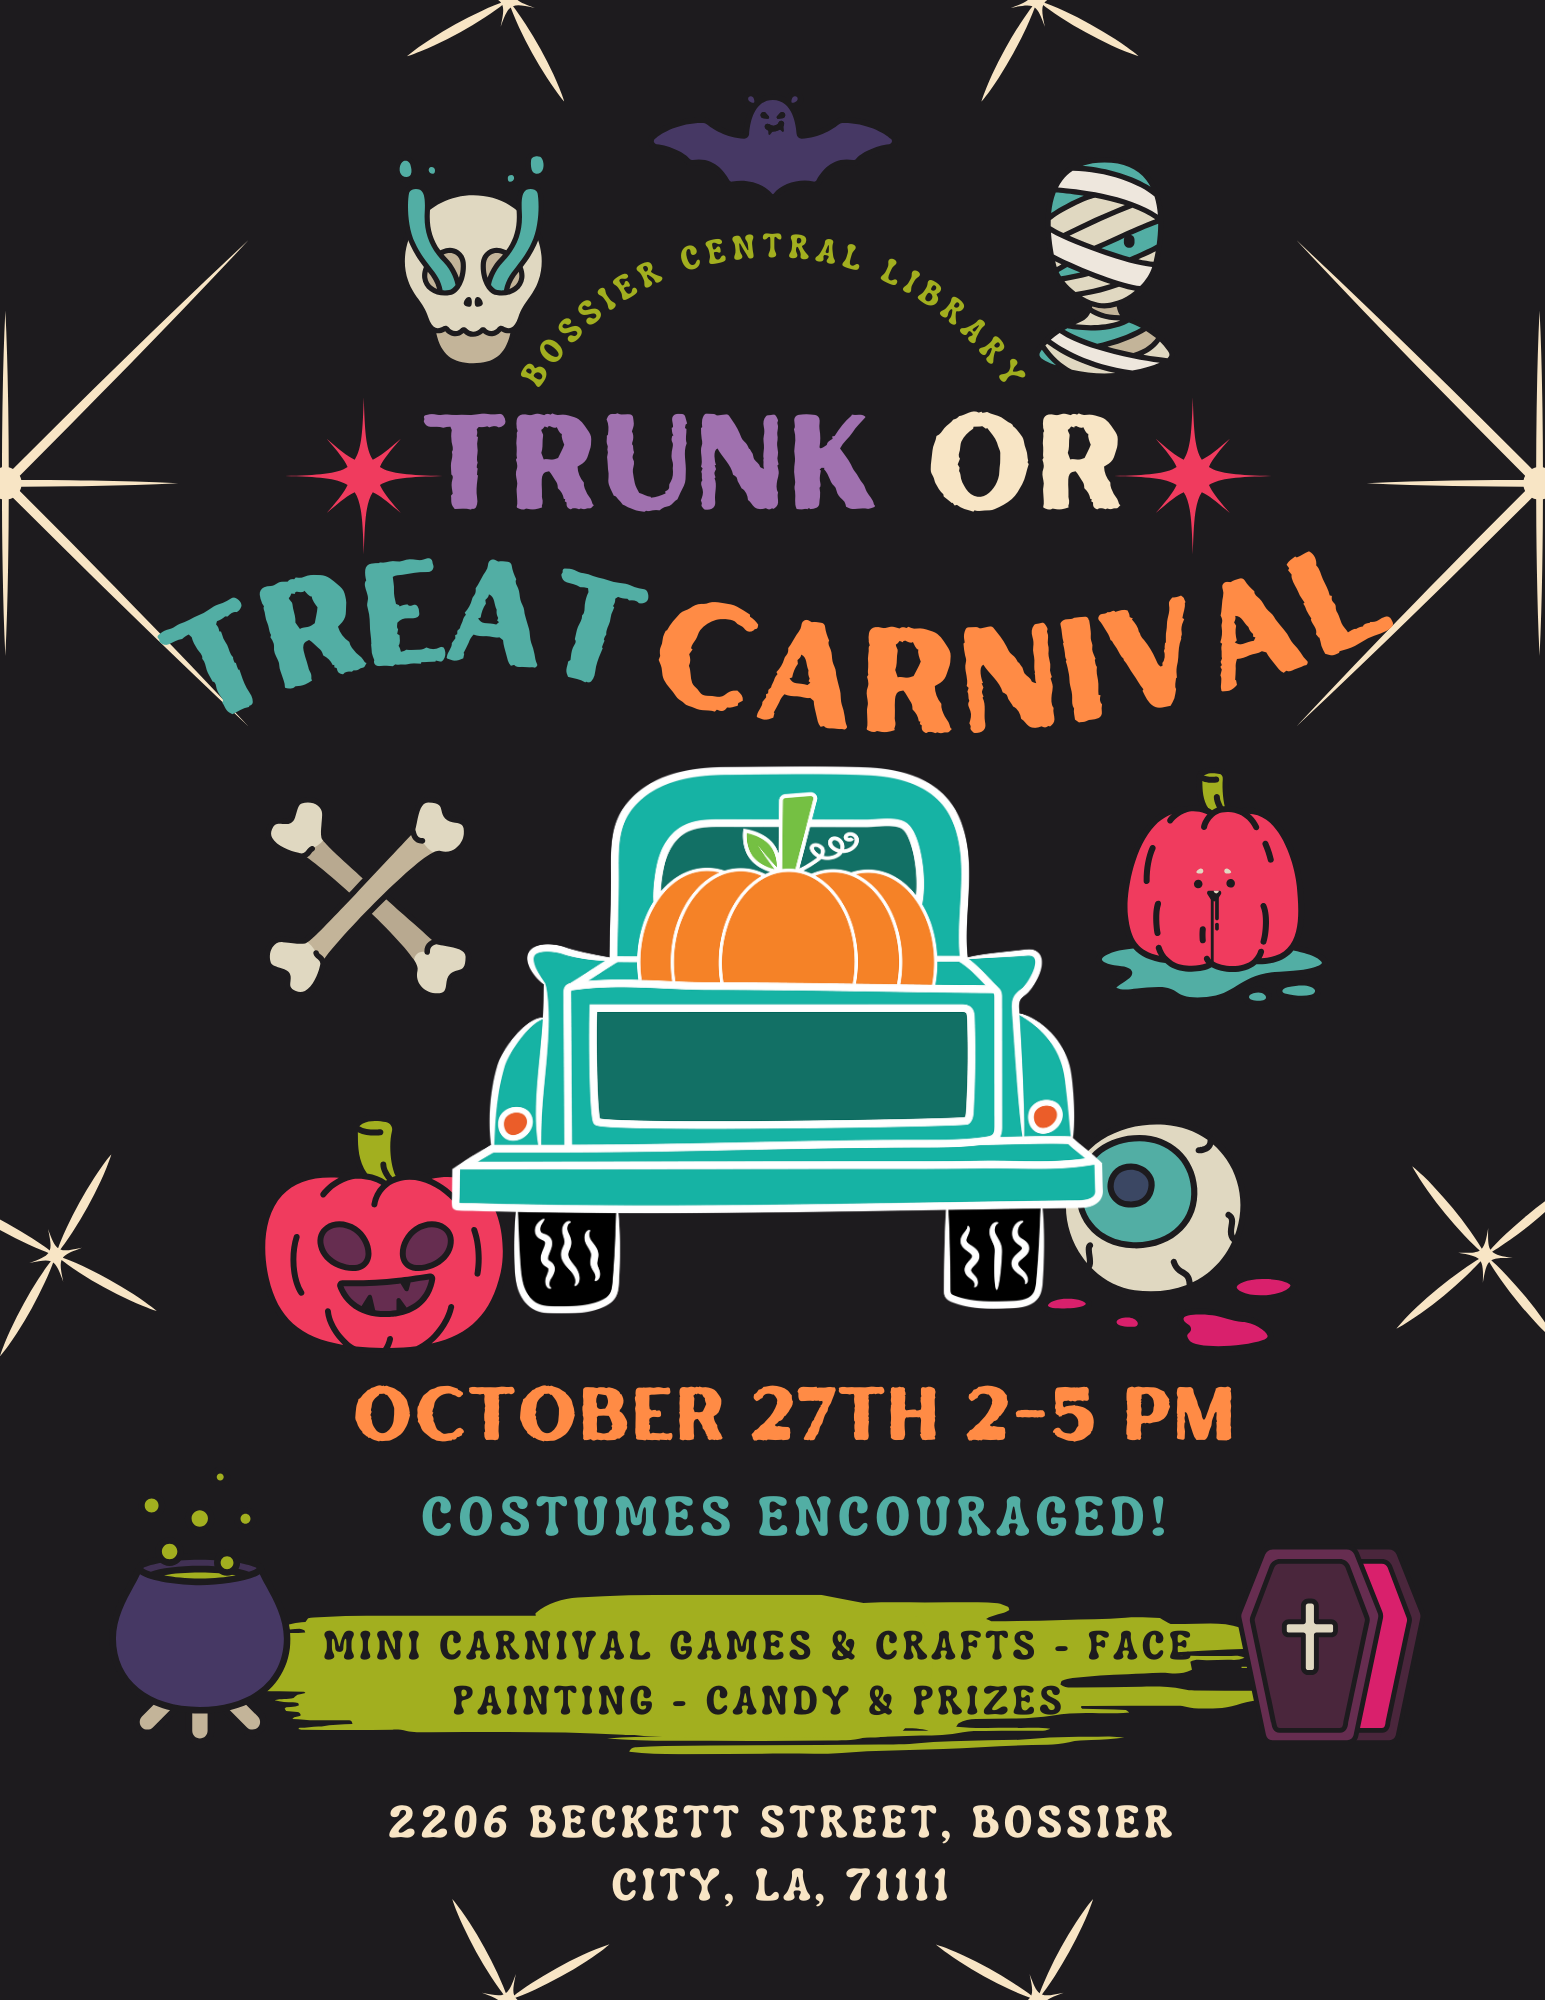 Trunk or Treat Carnival flyer